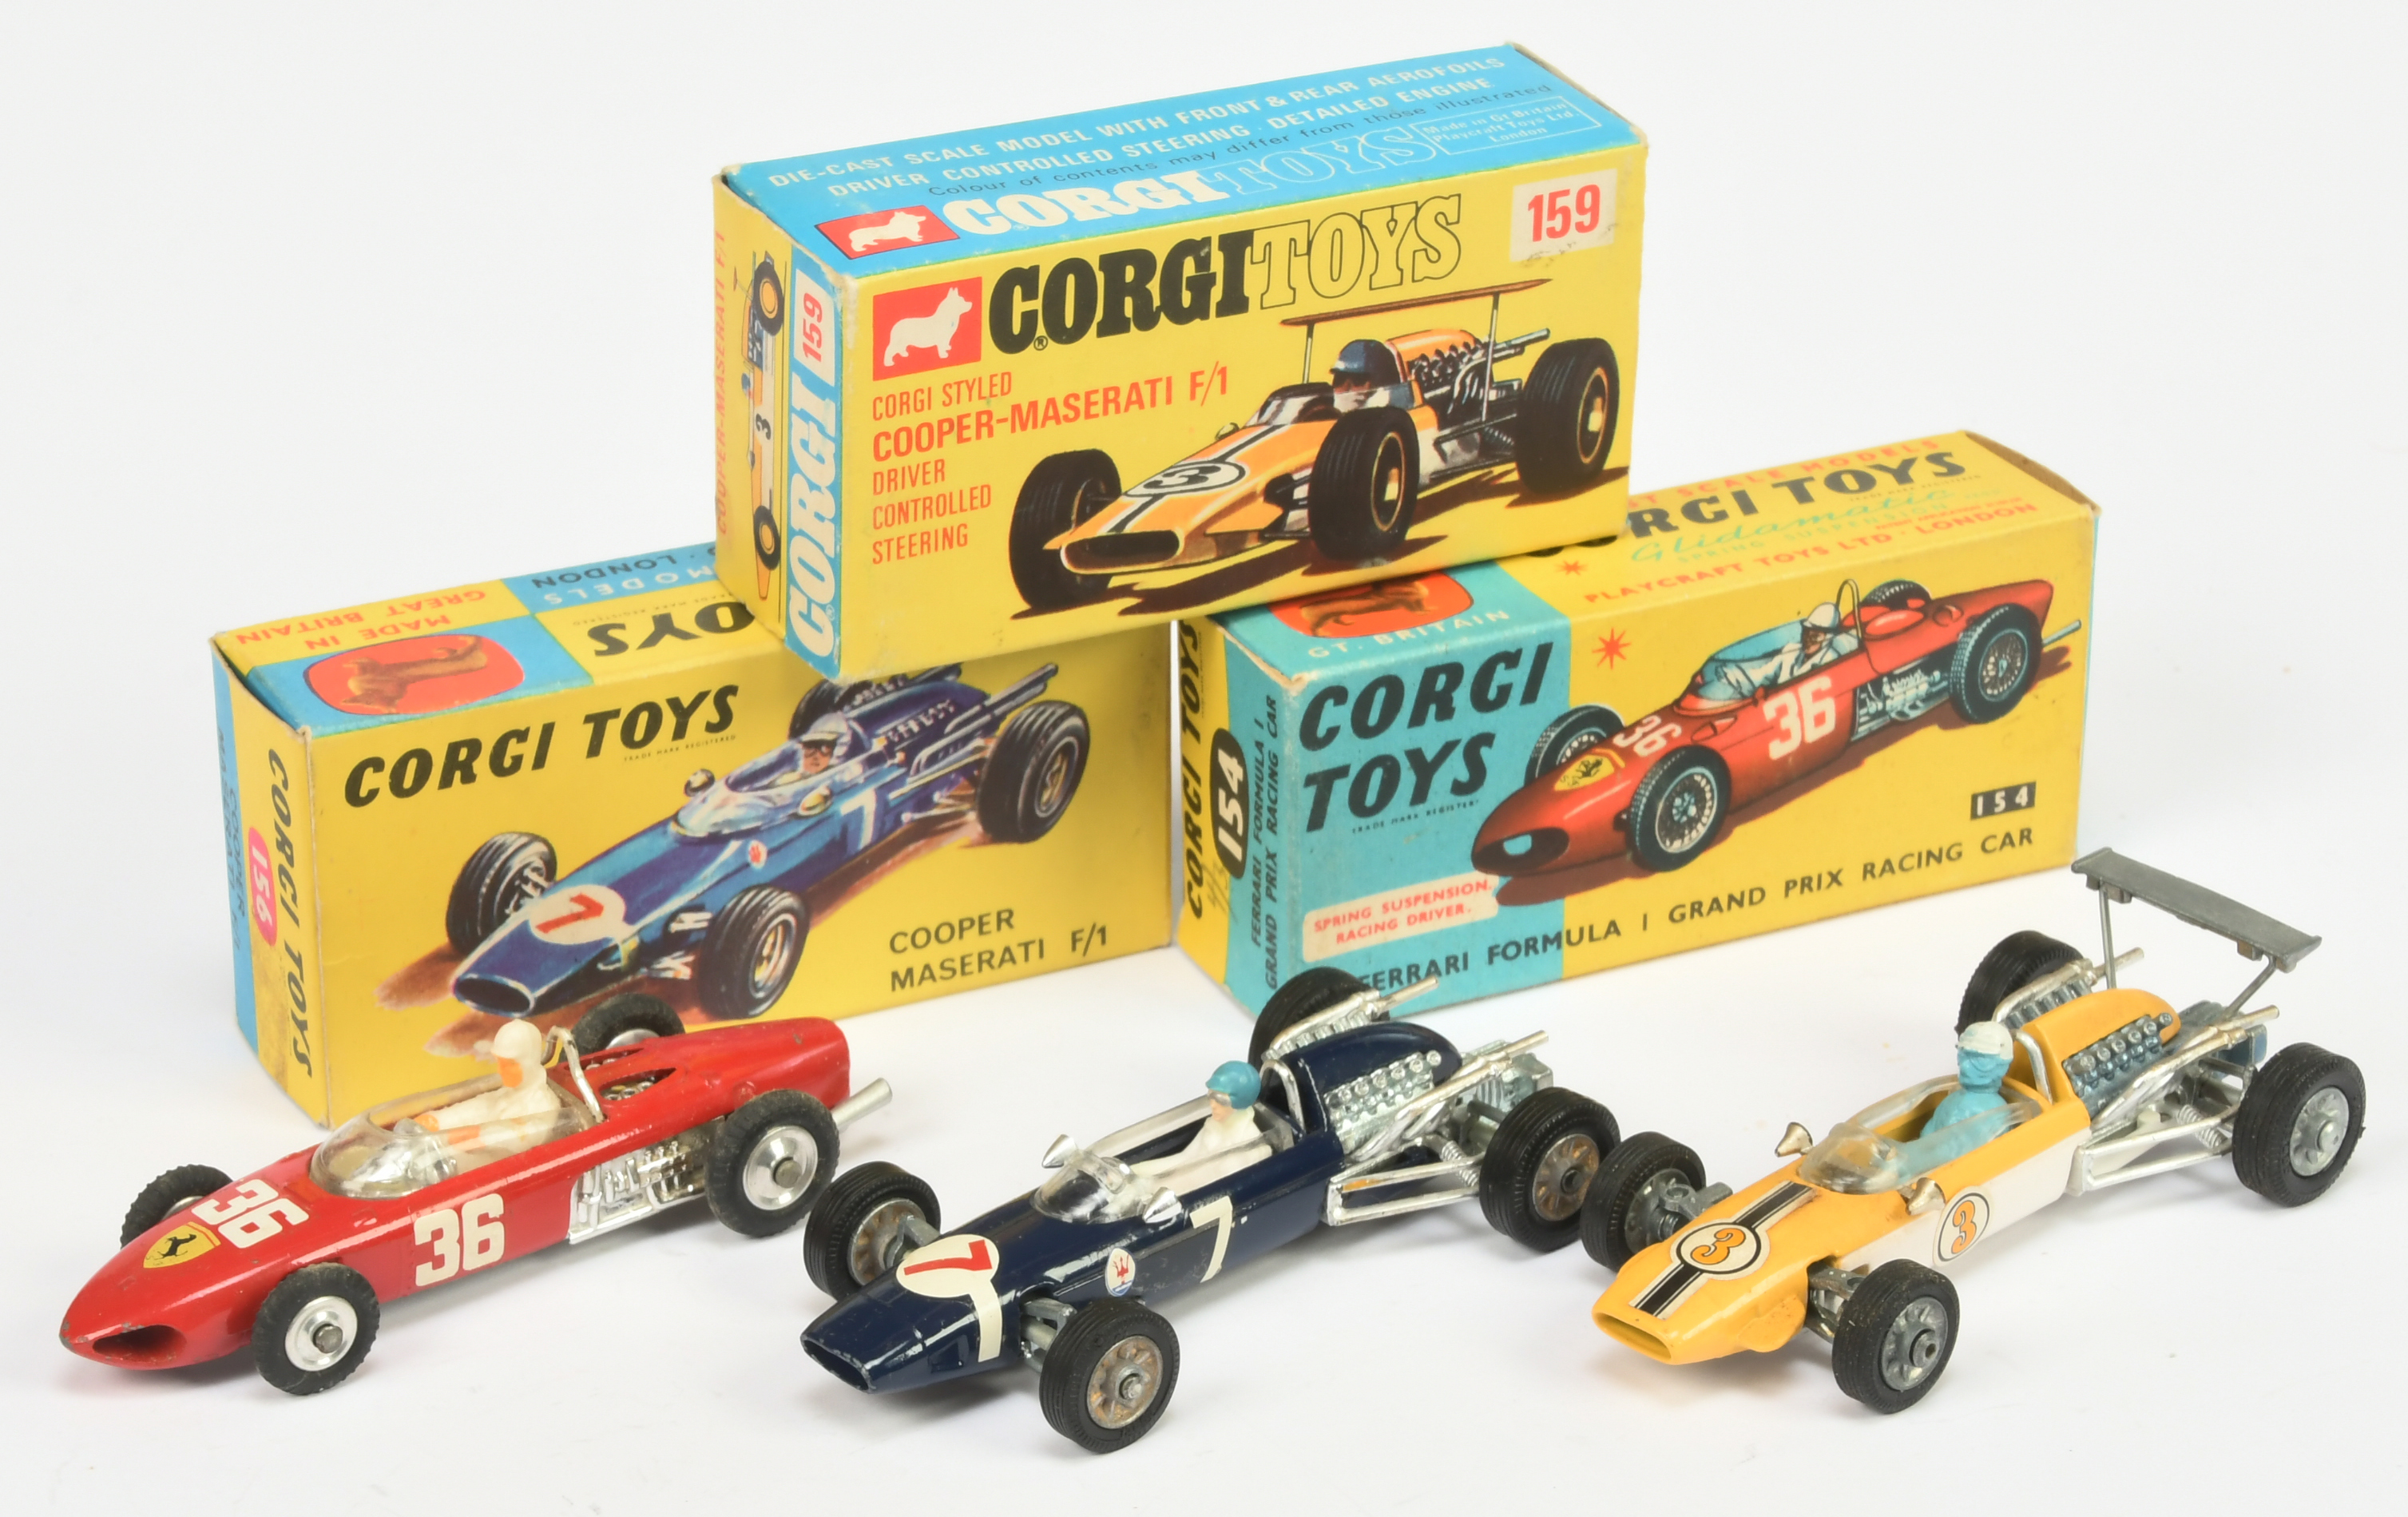 Corgi Toys Formula 1 Racing Cars Group Of 3 (1) 154 Ferrari - Red Body Silver and chrome trim, wi...